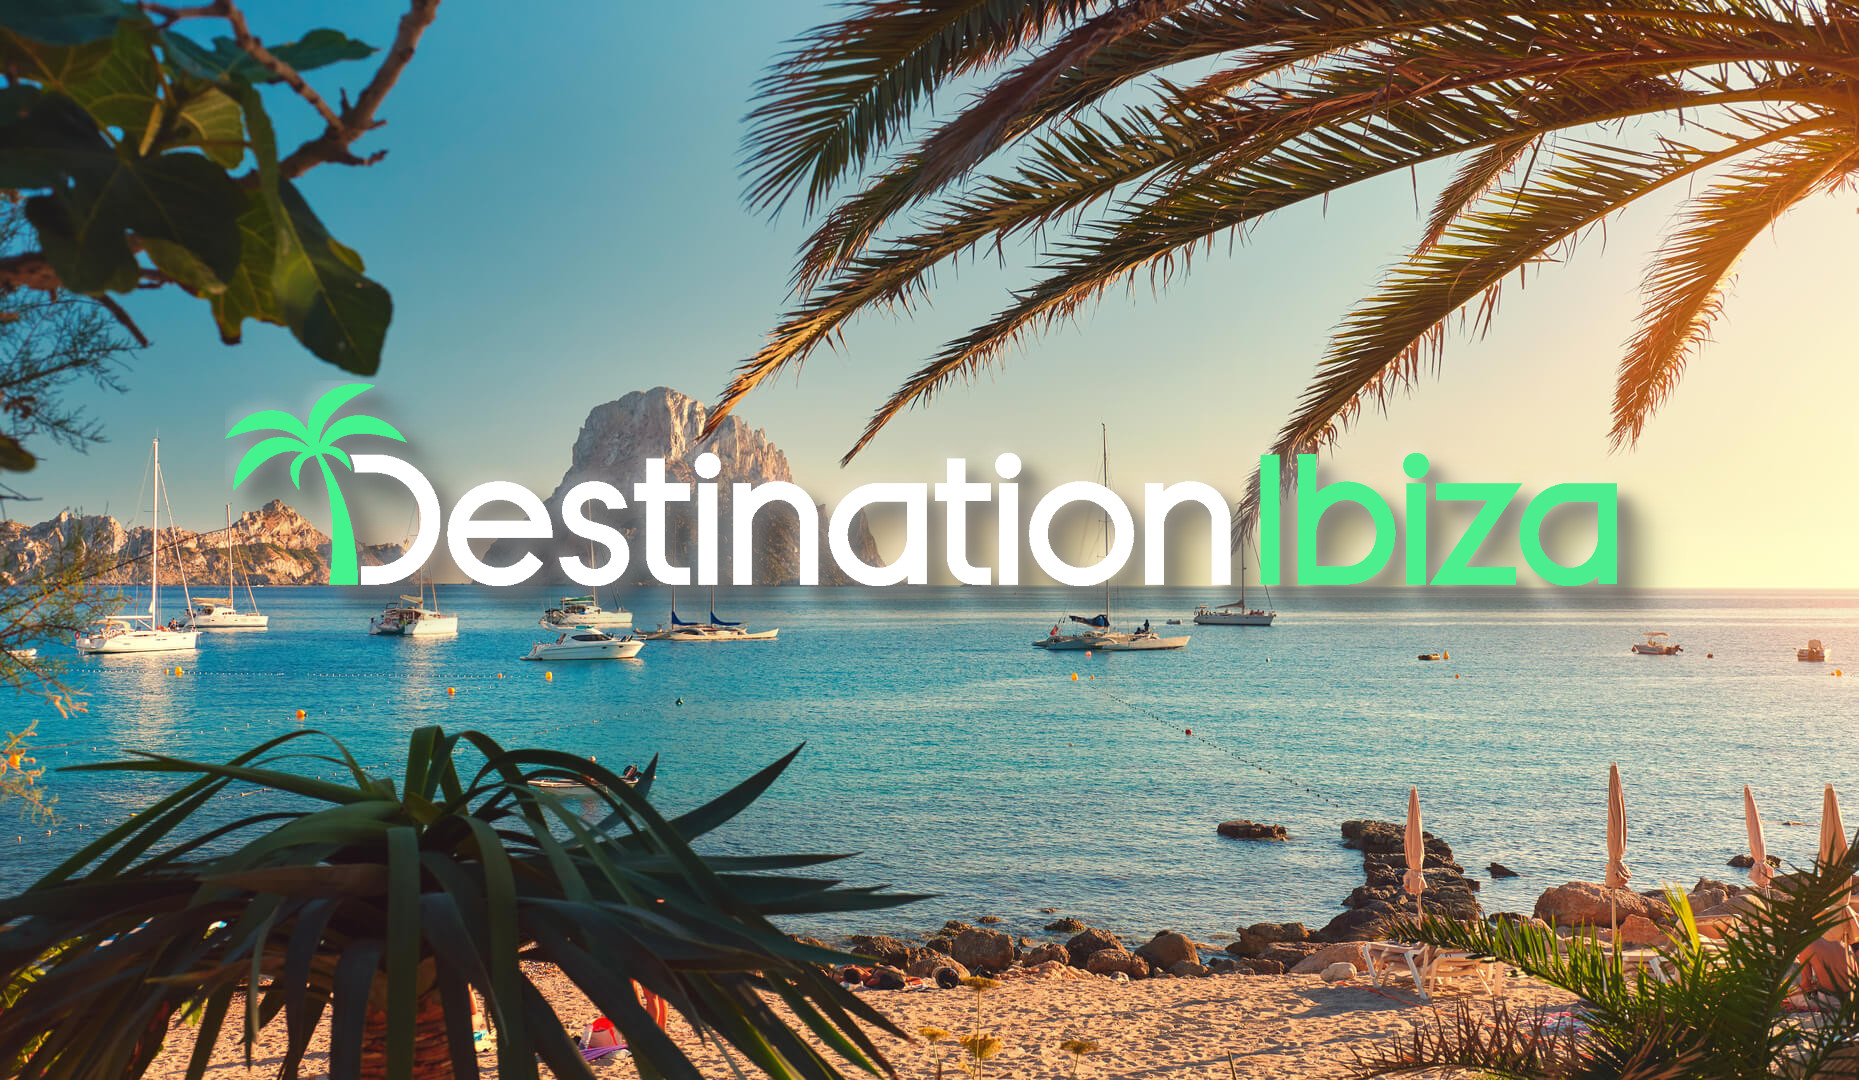 Destination Ibiza | Event information and Tickets